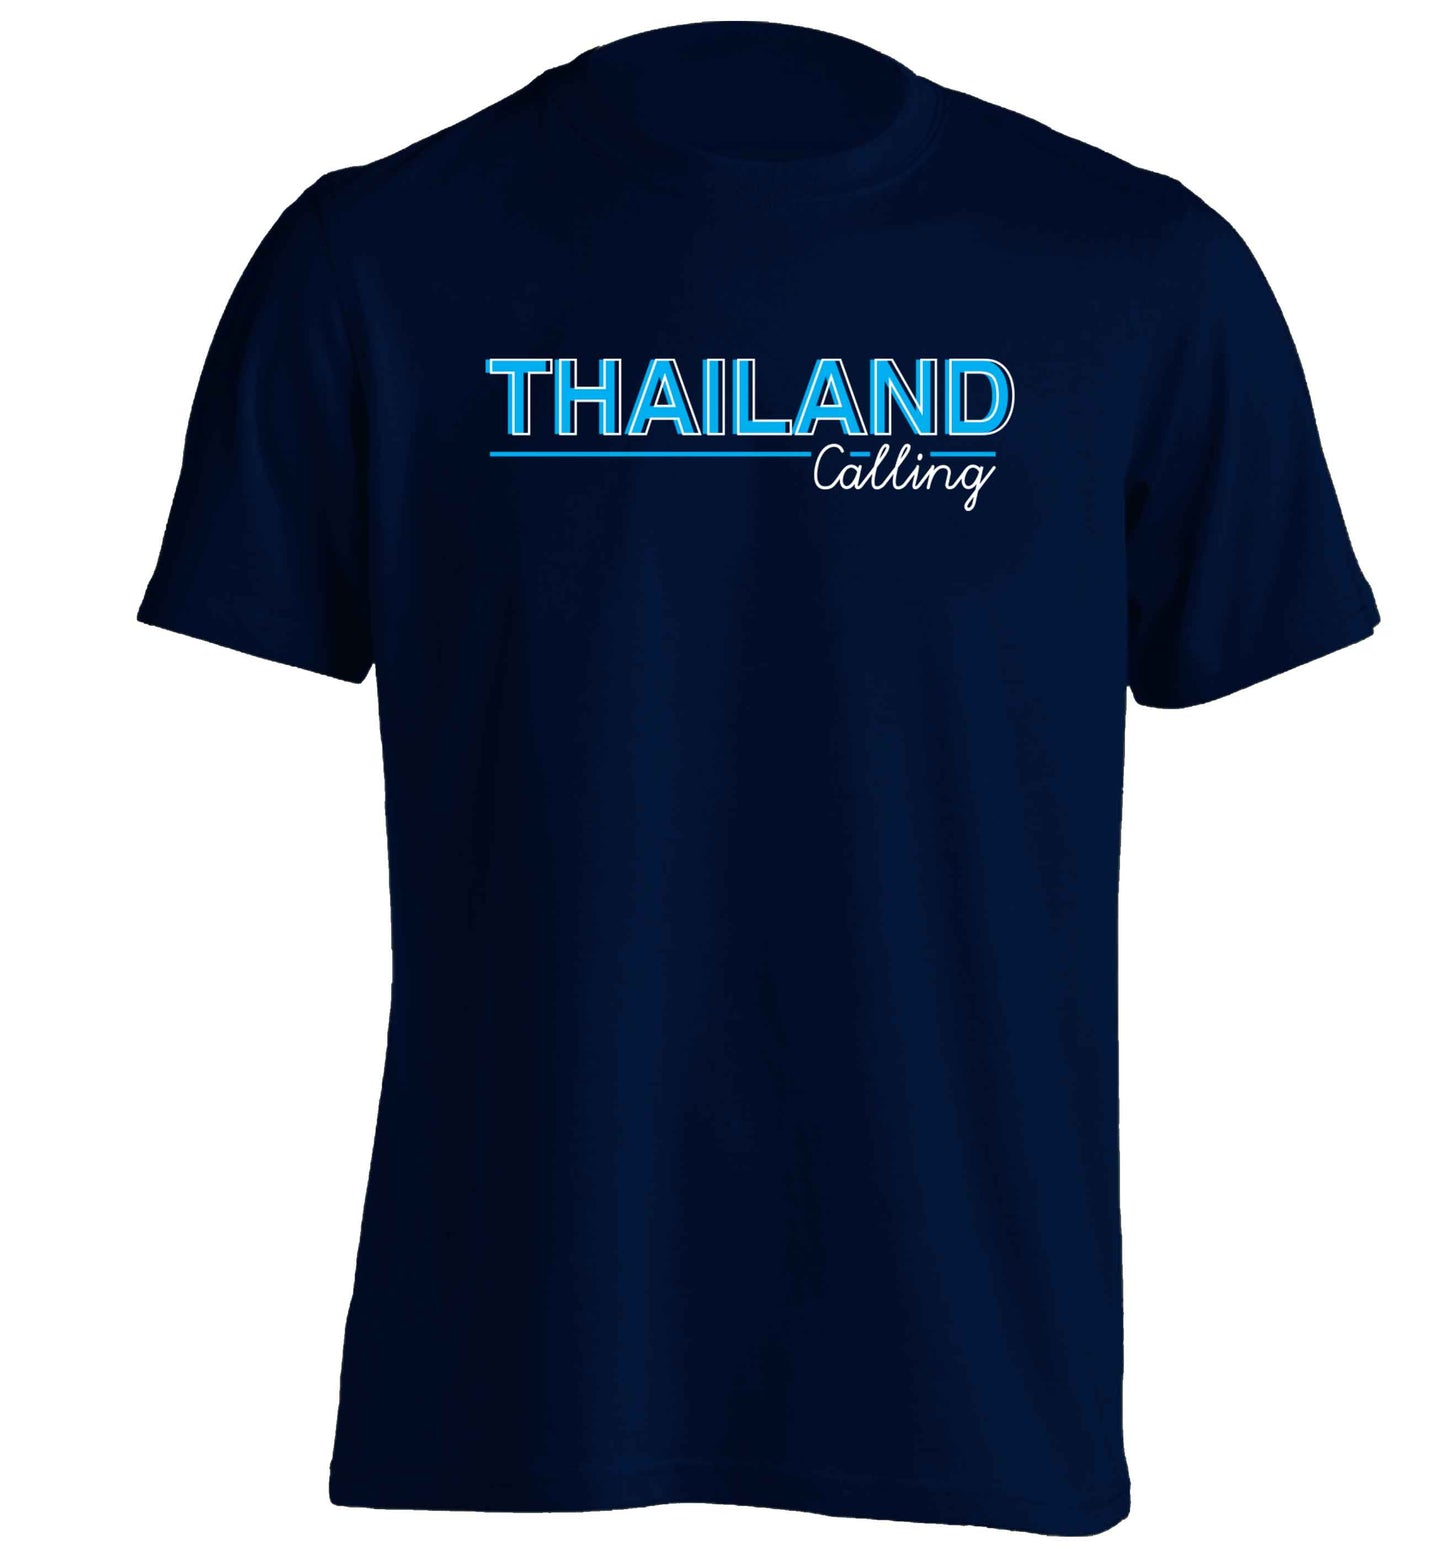 Thailand calling adults unisex navy Tshirt 2XL